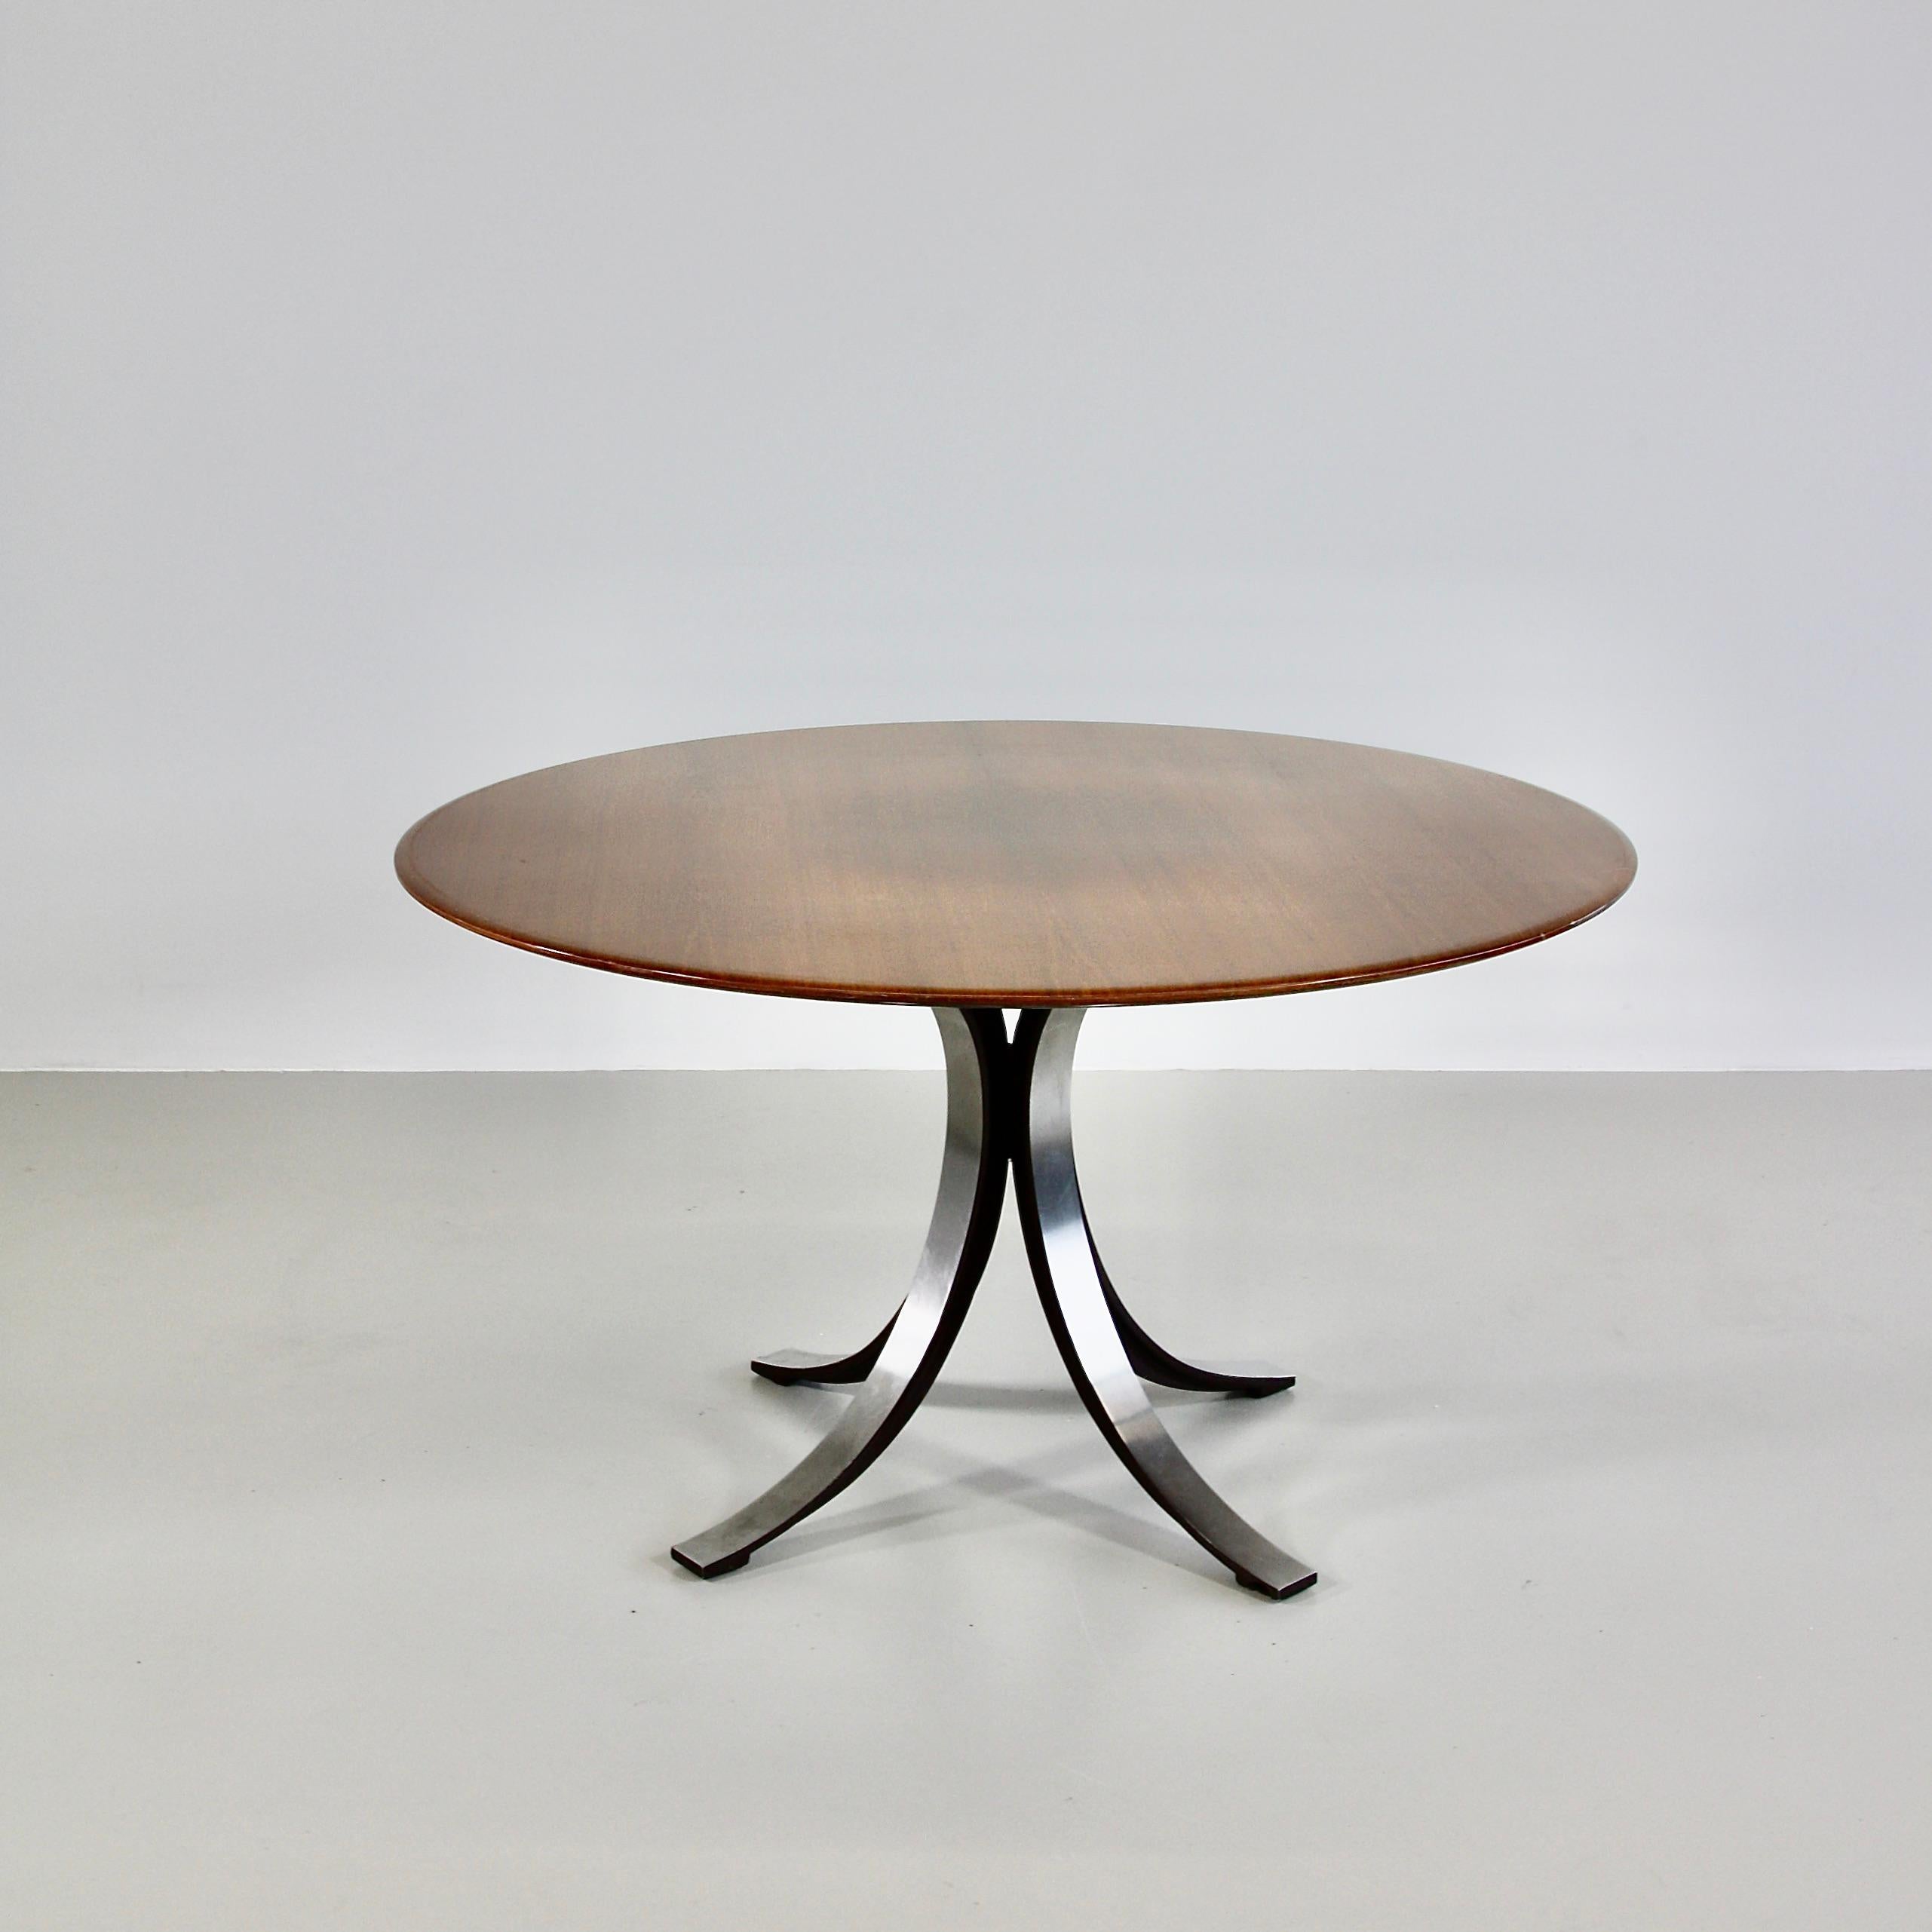 Mid-20th Century Dining Table by Osvaldo Borsani & Eugenio Gerli with Wooden Top, 1963-1964